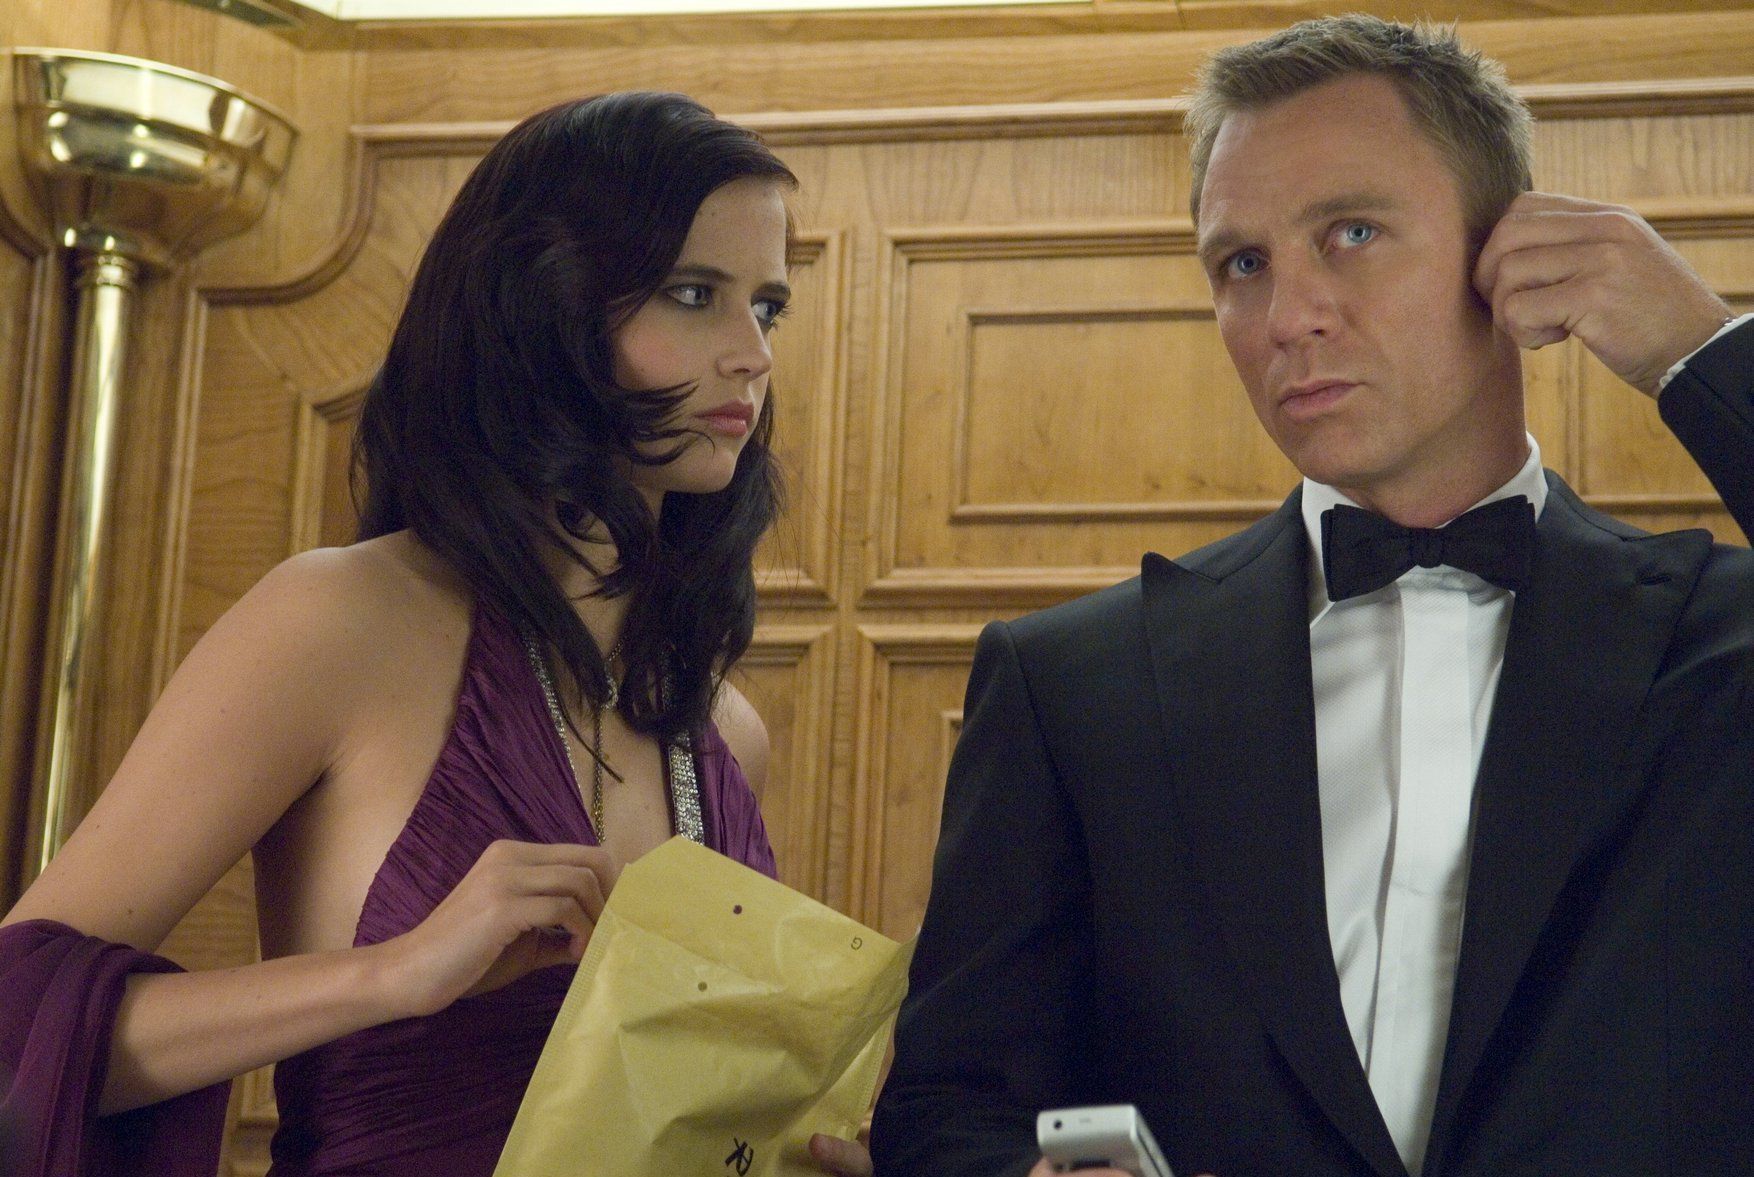 Casino Royale: Bond falls for Vesper Lynd & learns about quantum